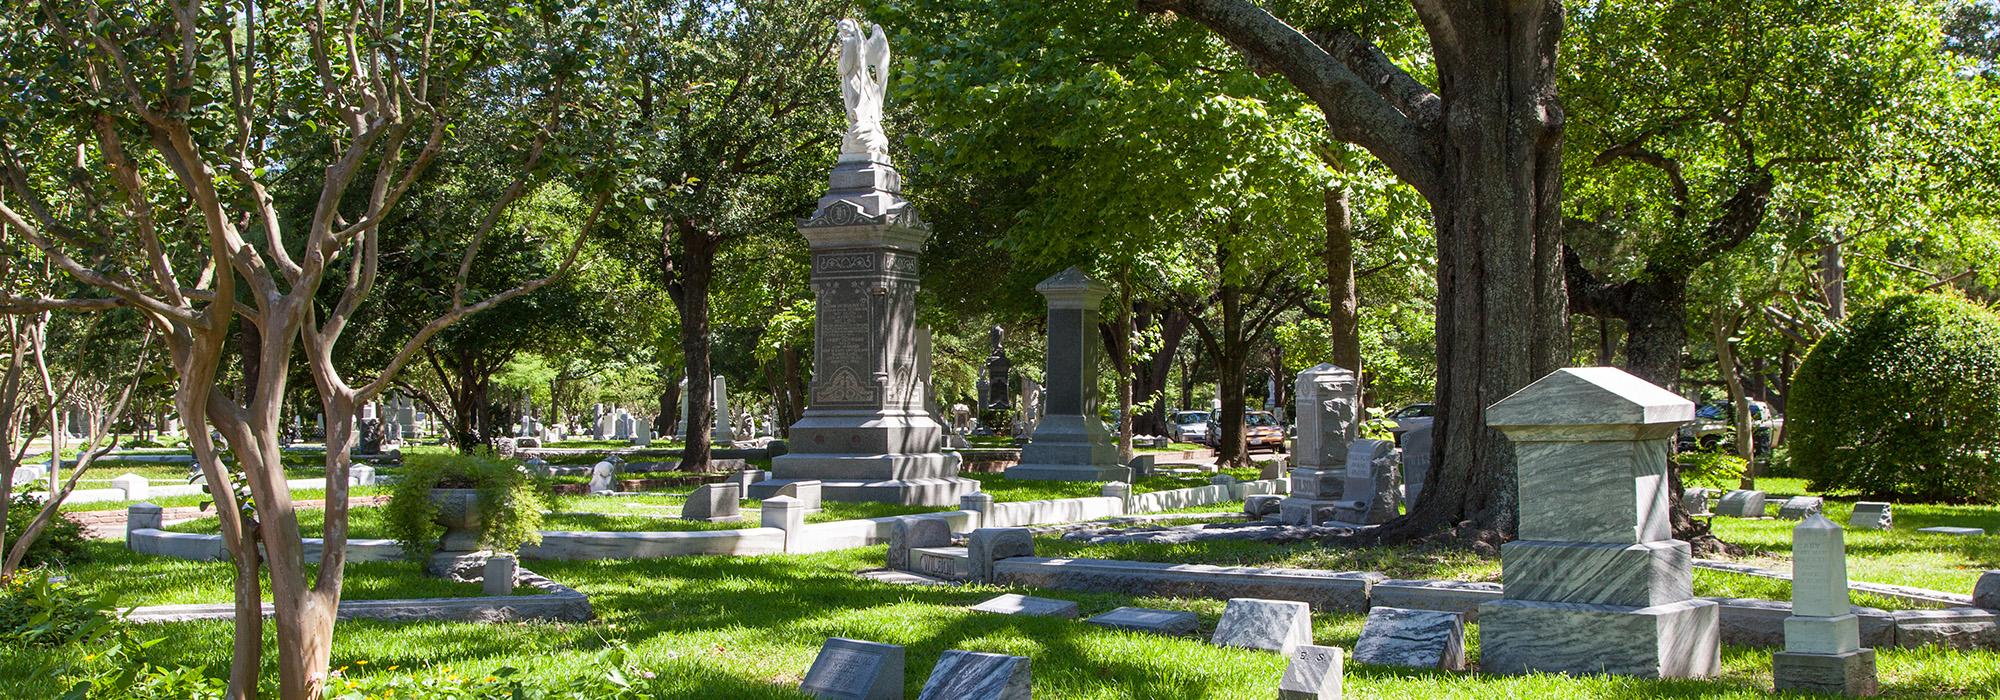 Glenwood Cmetery, Houston, TX